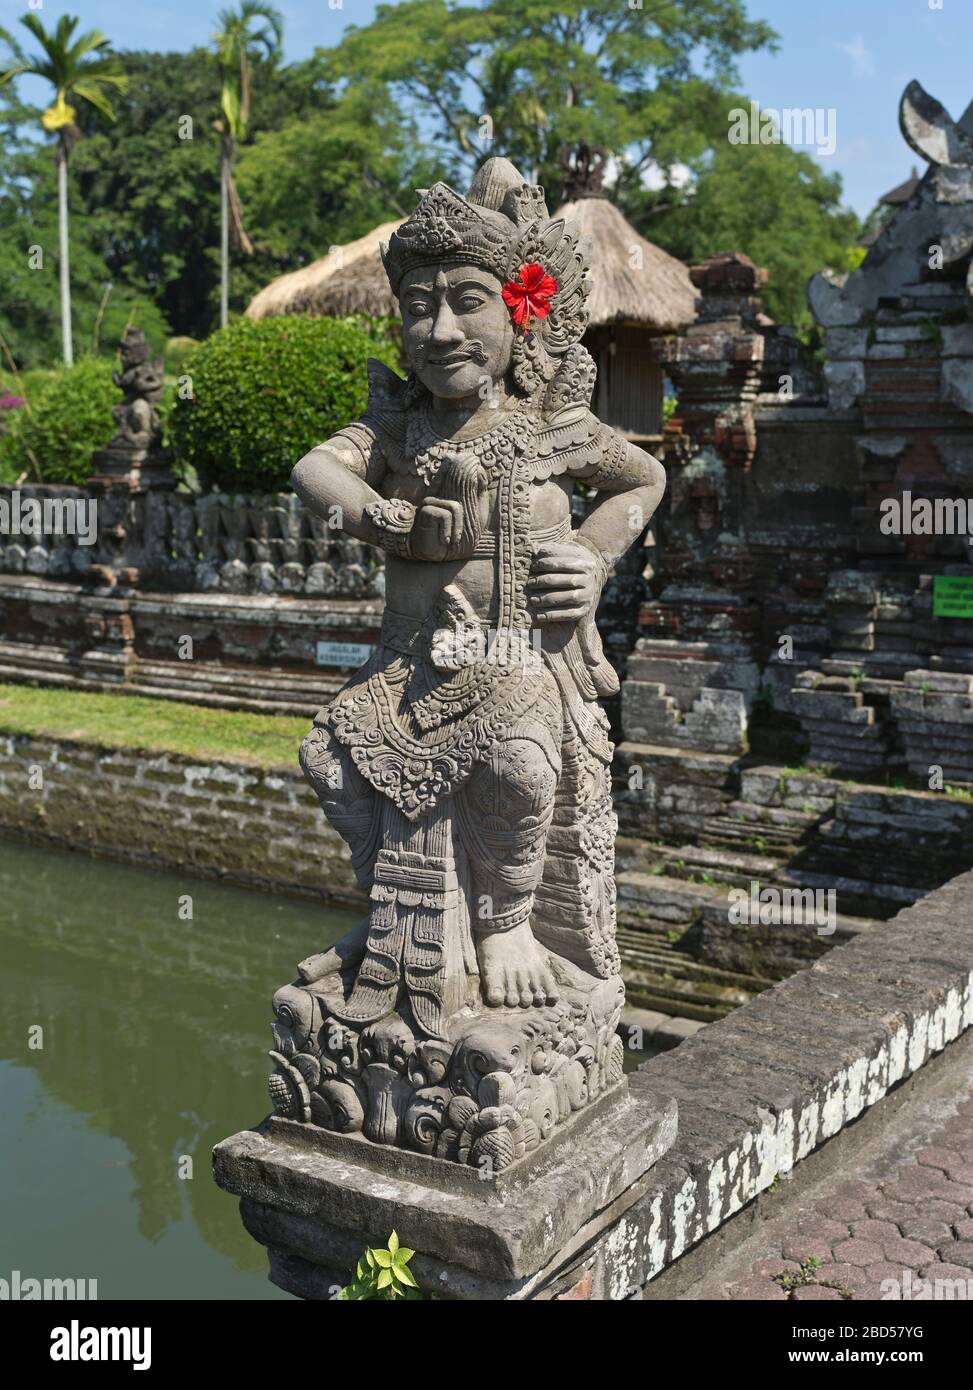 dh pura Taman Ayun Royal Temple BALI INDONESIA Mengwi Balinese statua idol guardia Tempio induismo religione indù asiatica Foto Stock